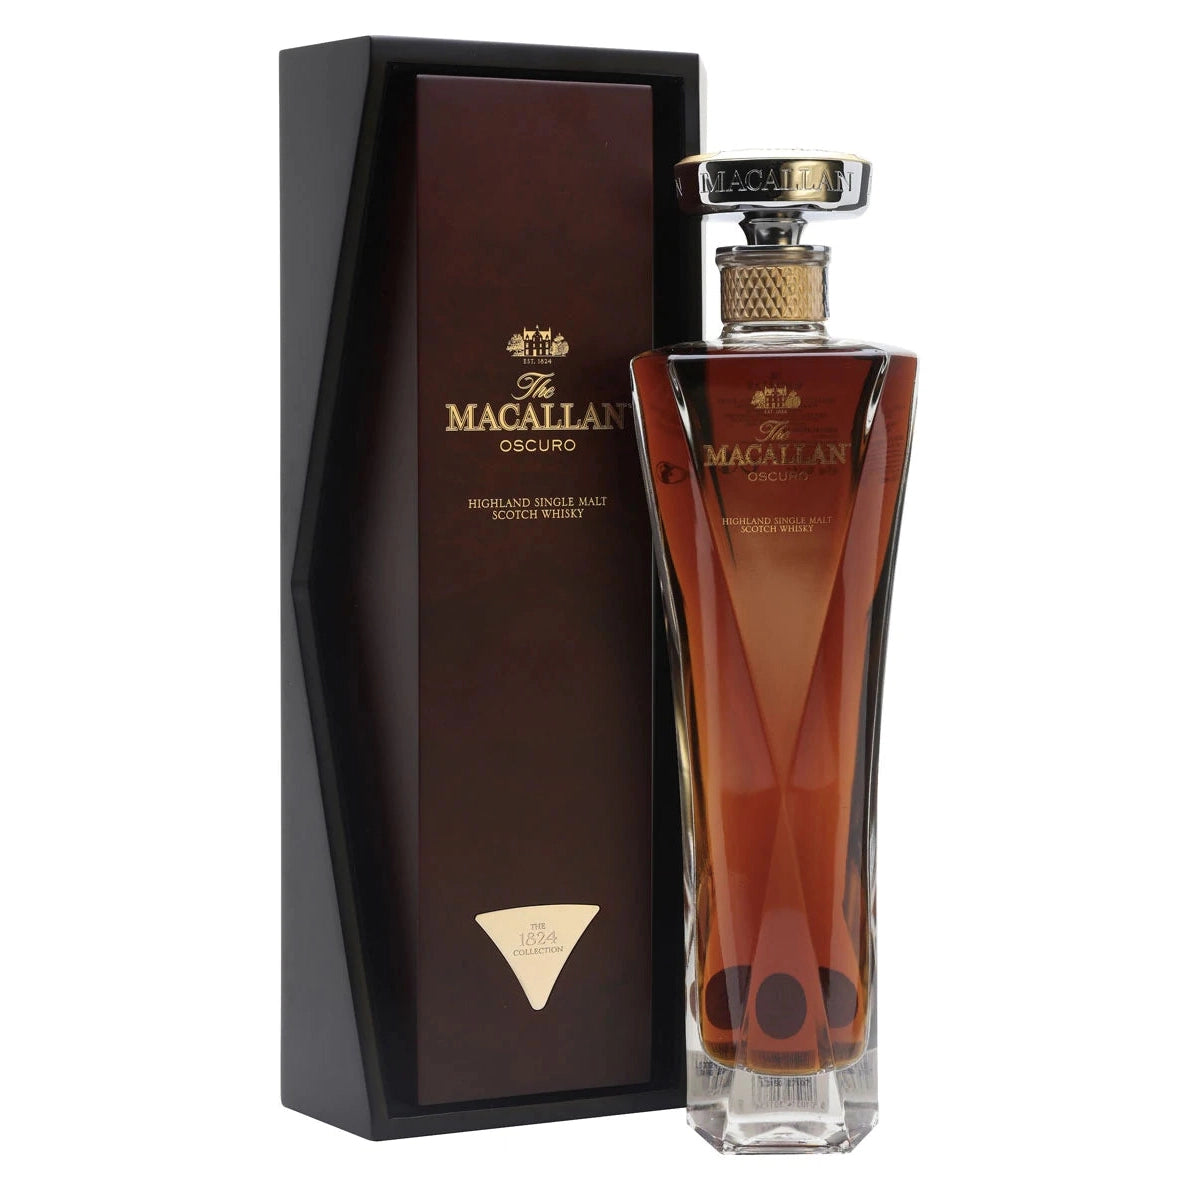 The Macallan 1824 Oscuro Single Malt Scotch Whisky 700ml